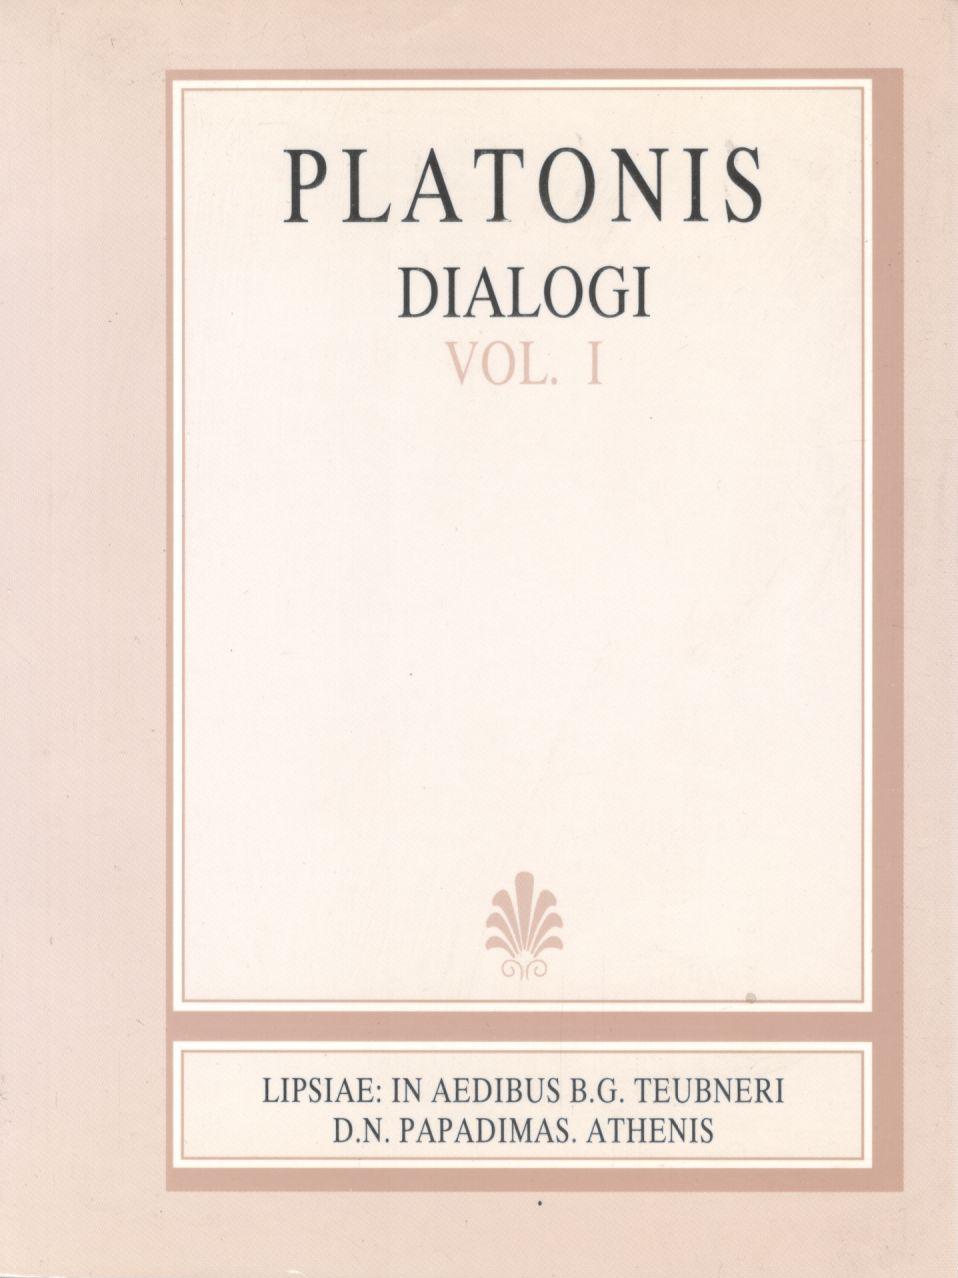 Platonis, Dialogi, Vol. I, [Πλάτωνος, Διάλογοι, τ. Α']